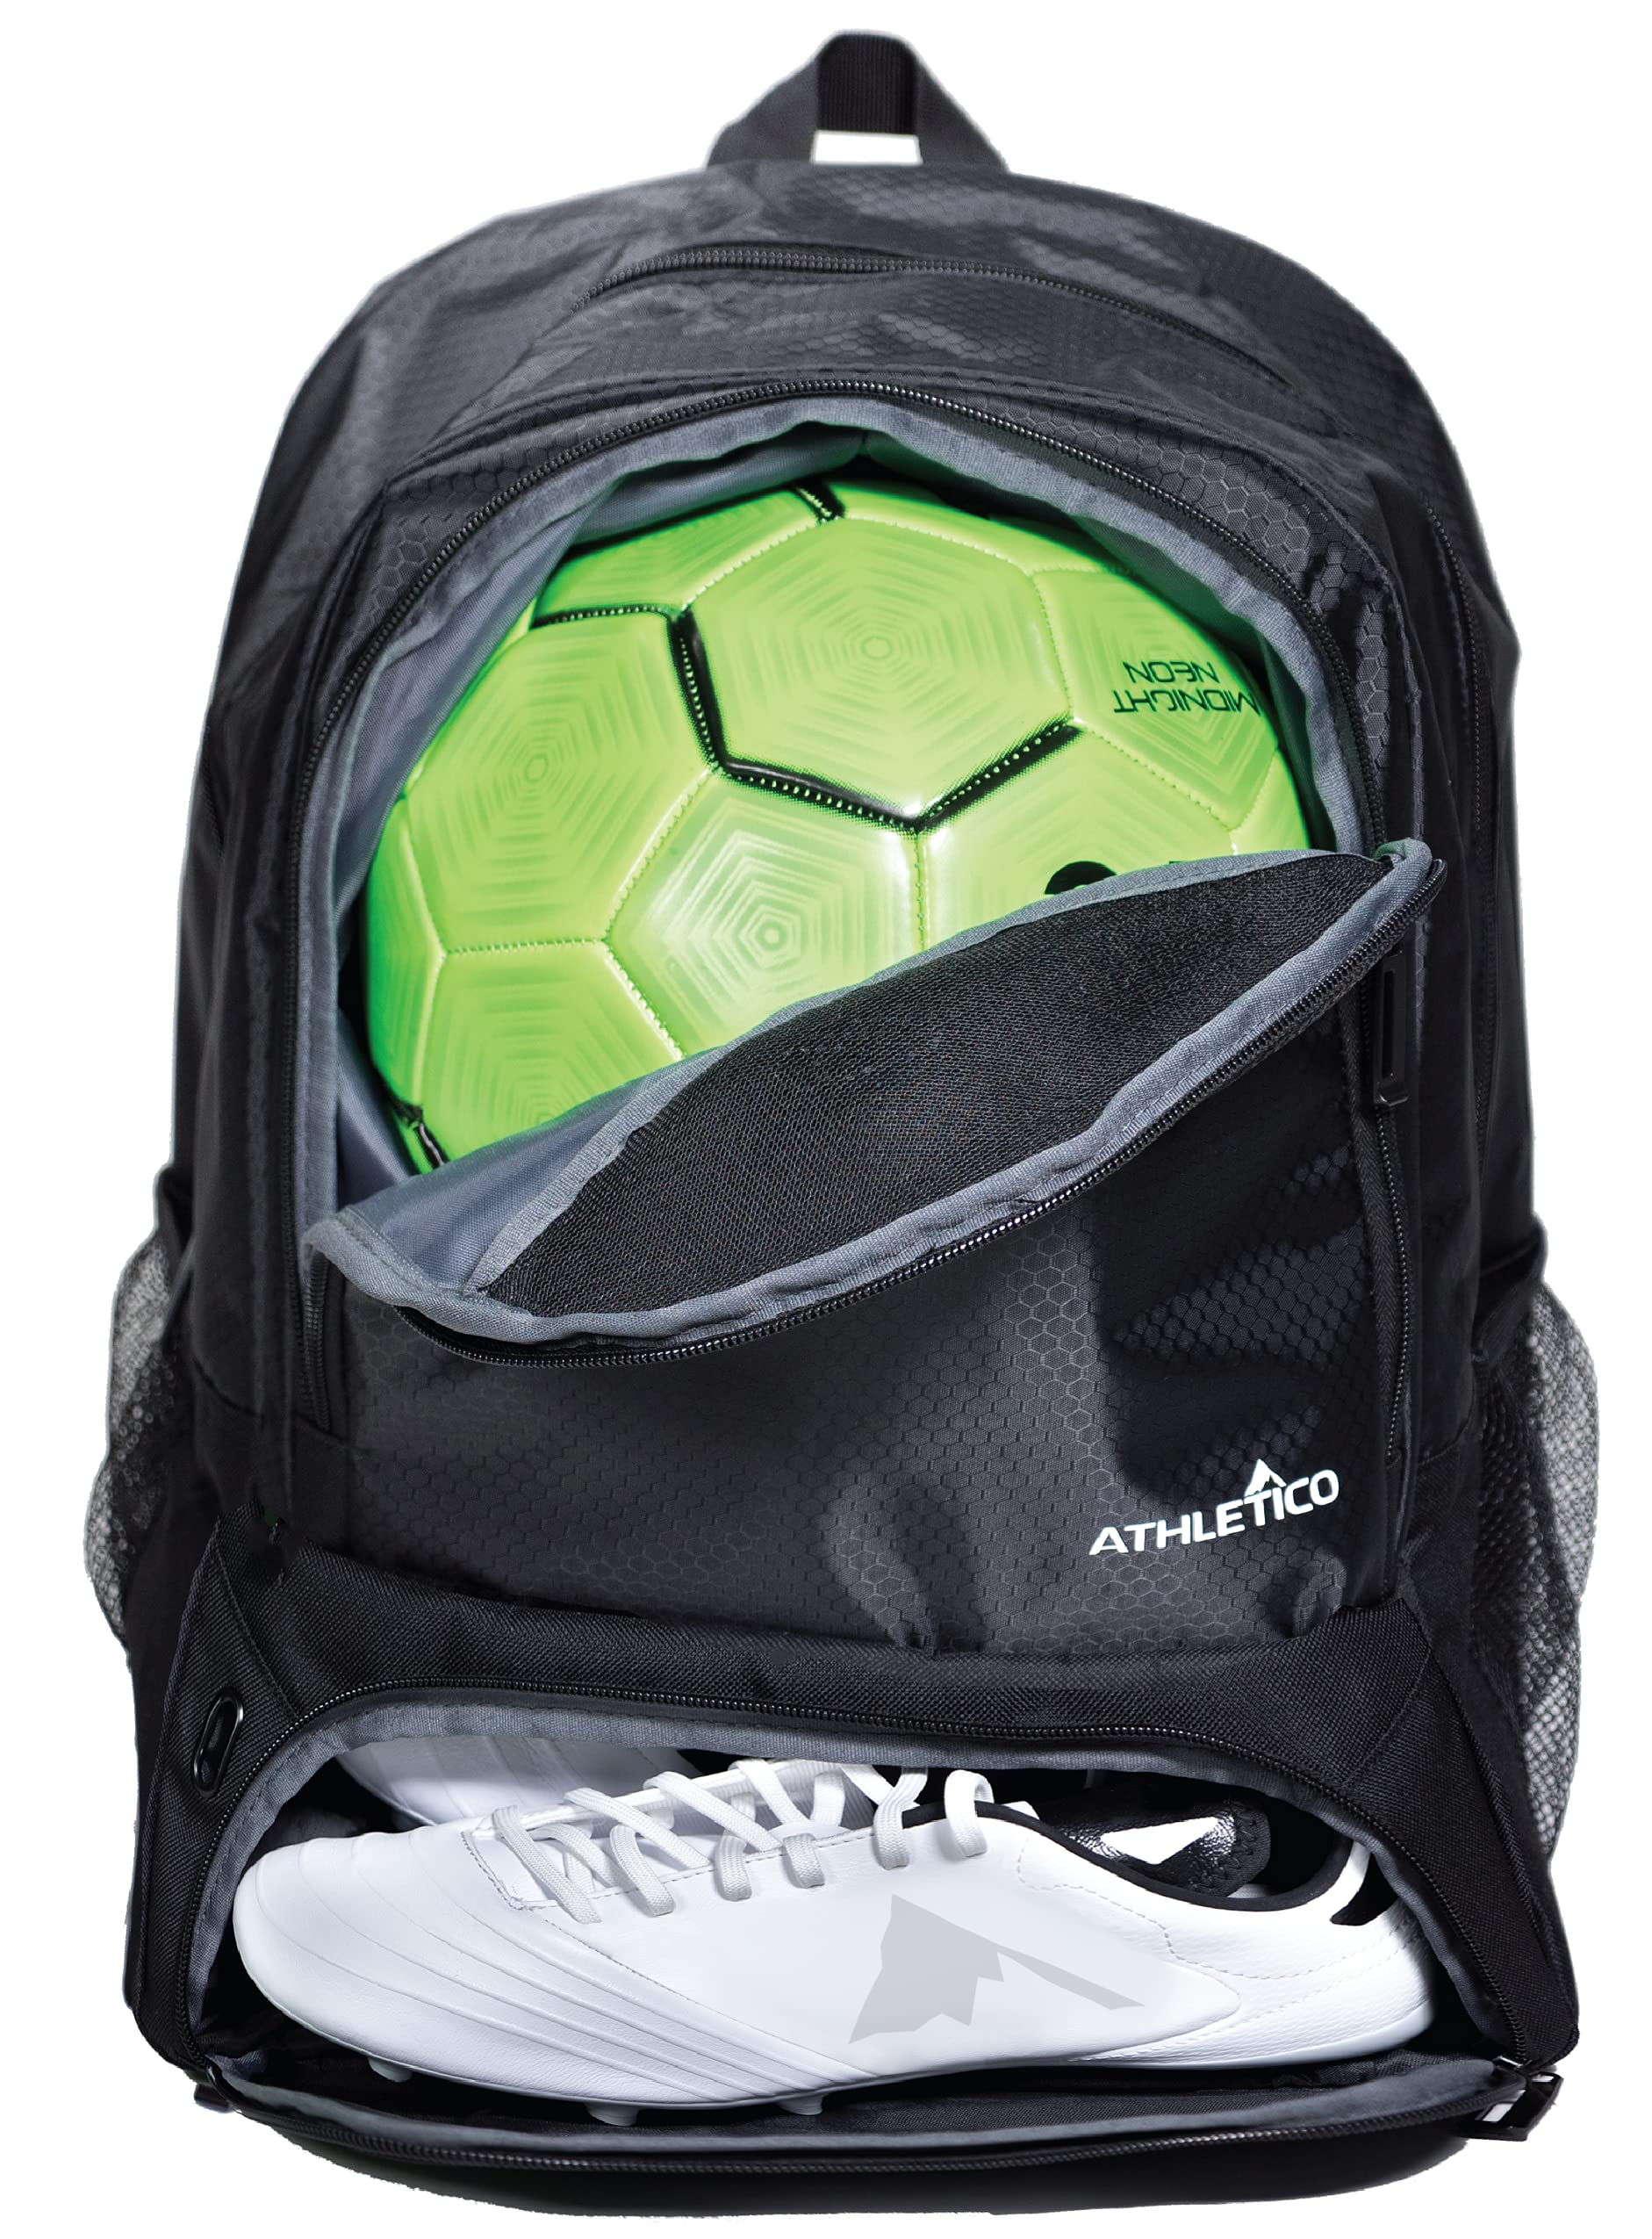 Athletico Youth Soccer Bag Best Soccer Backpacks